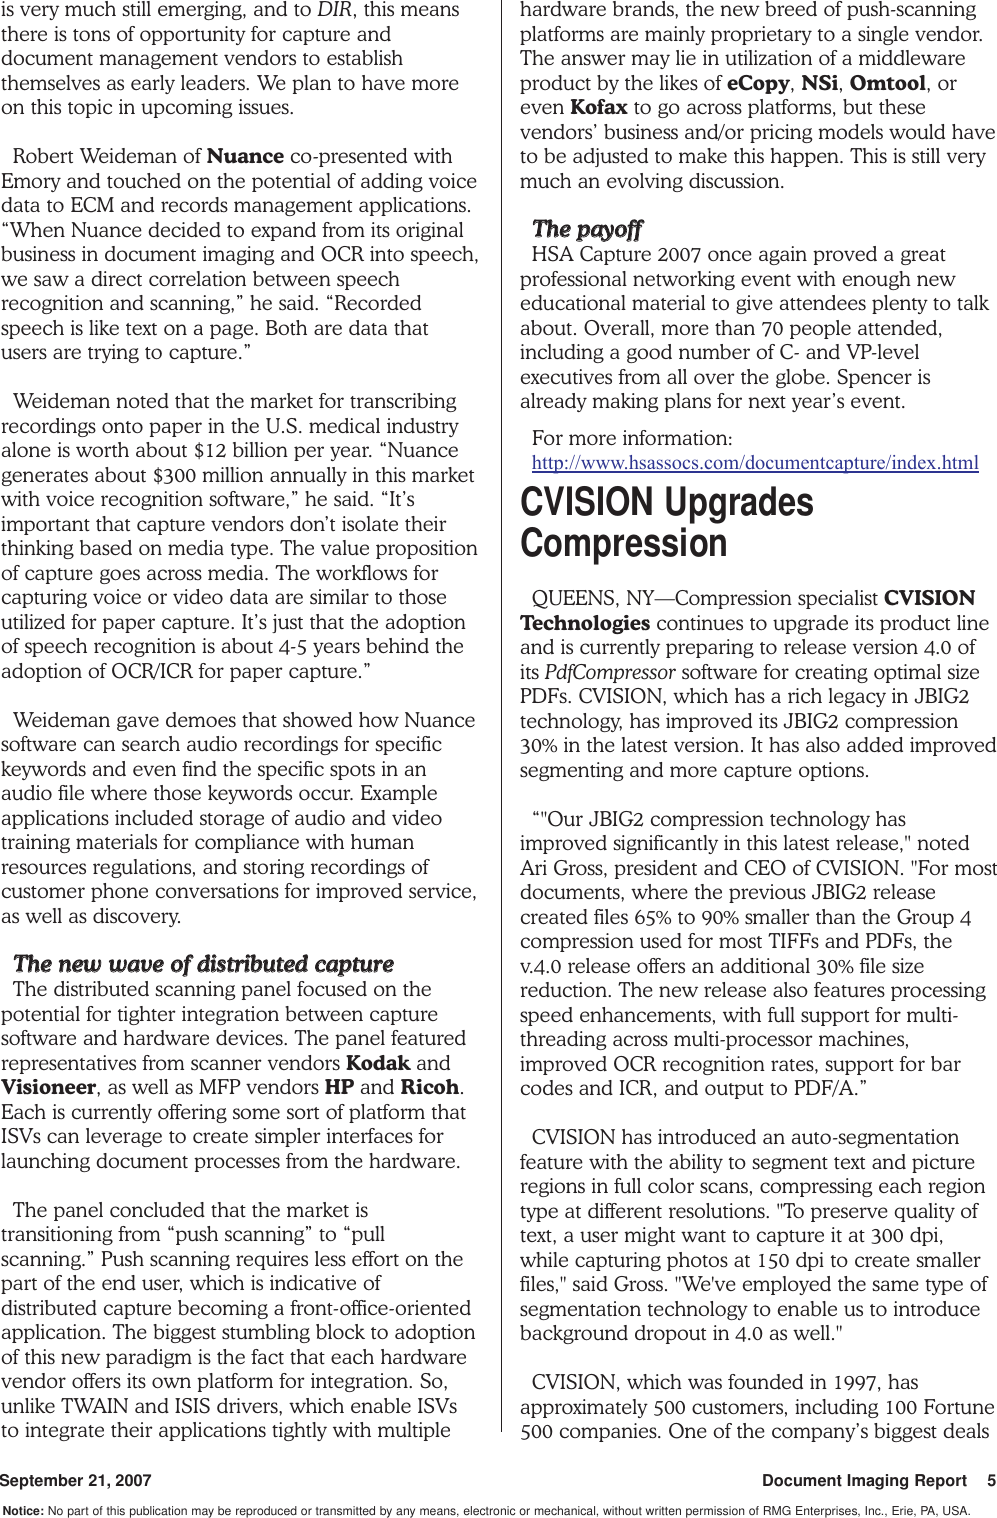 Page 5 of 8 - Fujitsu DIR 9-21-07 FCPA Upgrades Dept. Scanner Dir-092107 Review